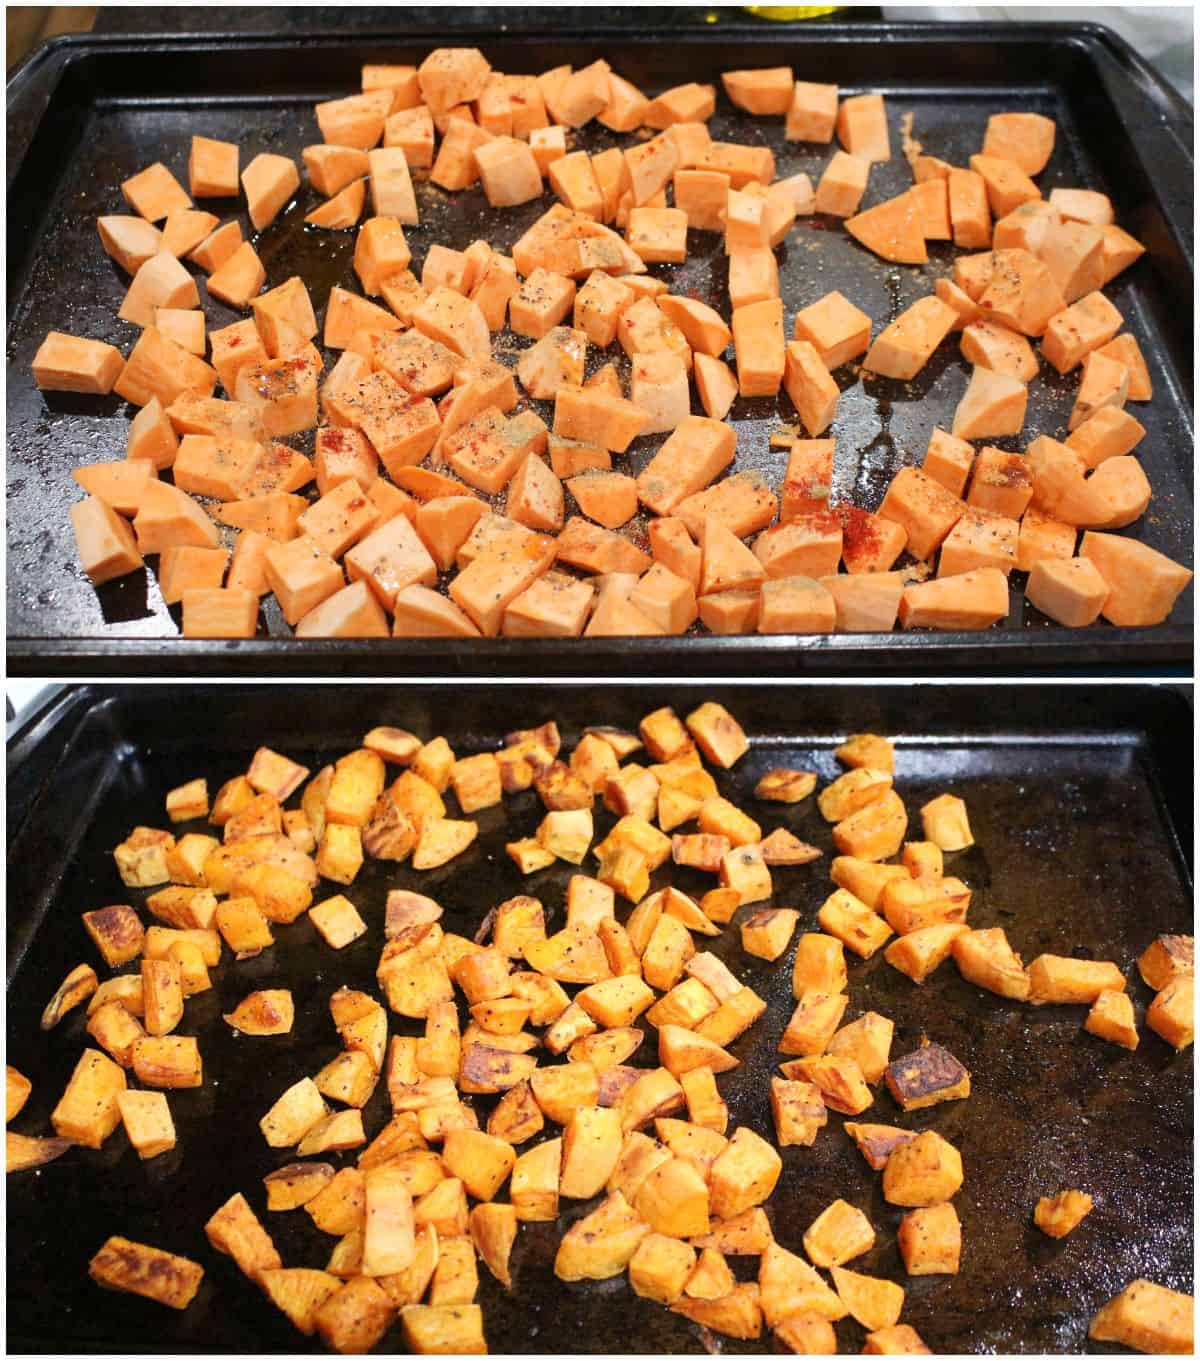 Roasting sweet potatoes in a baking tray.